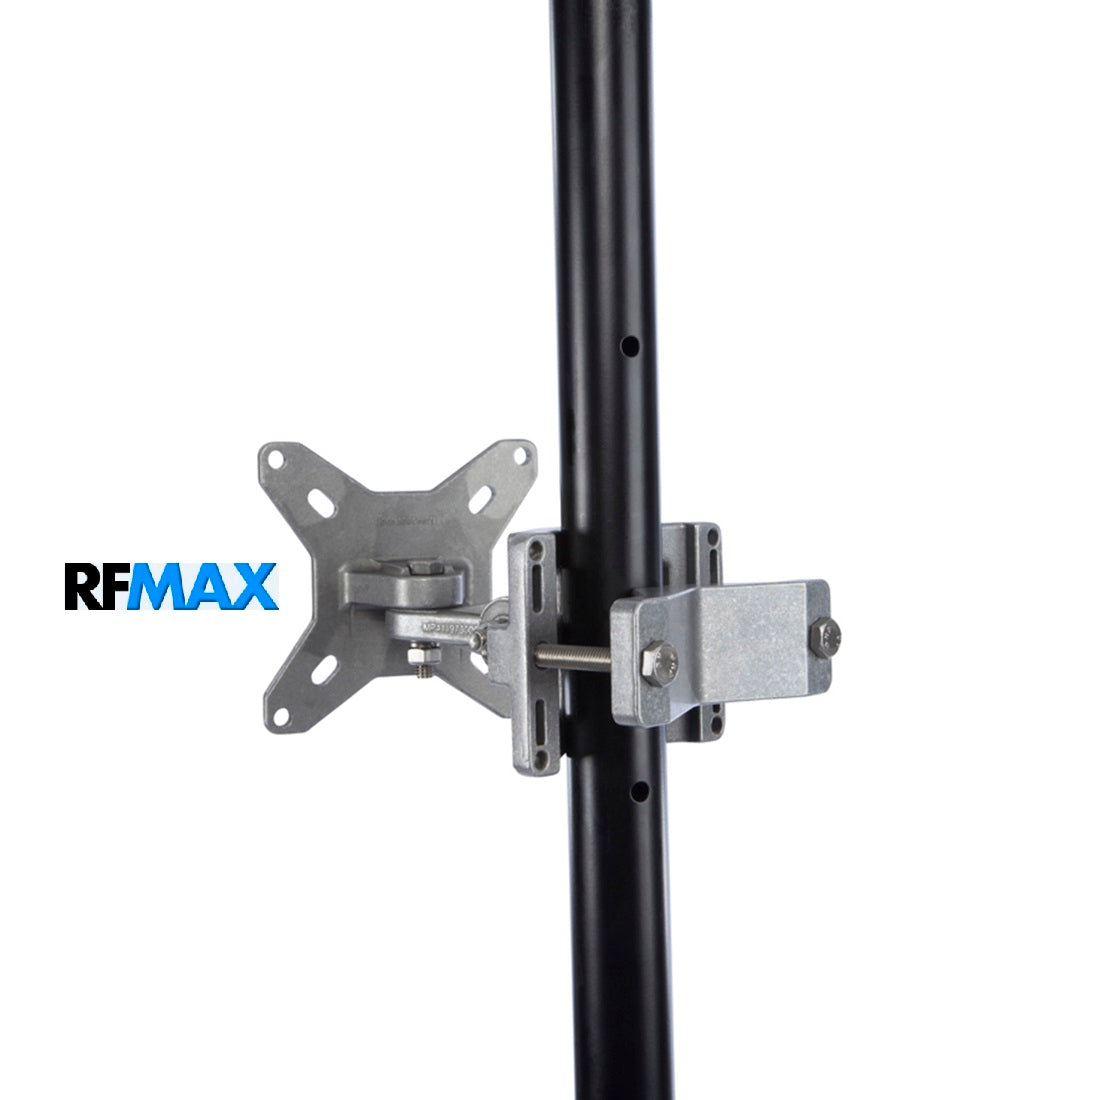 RFMAX RFID Antenna RFID Antenna Part #: RFMT70 | SKU: RFM529106